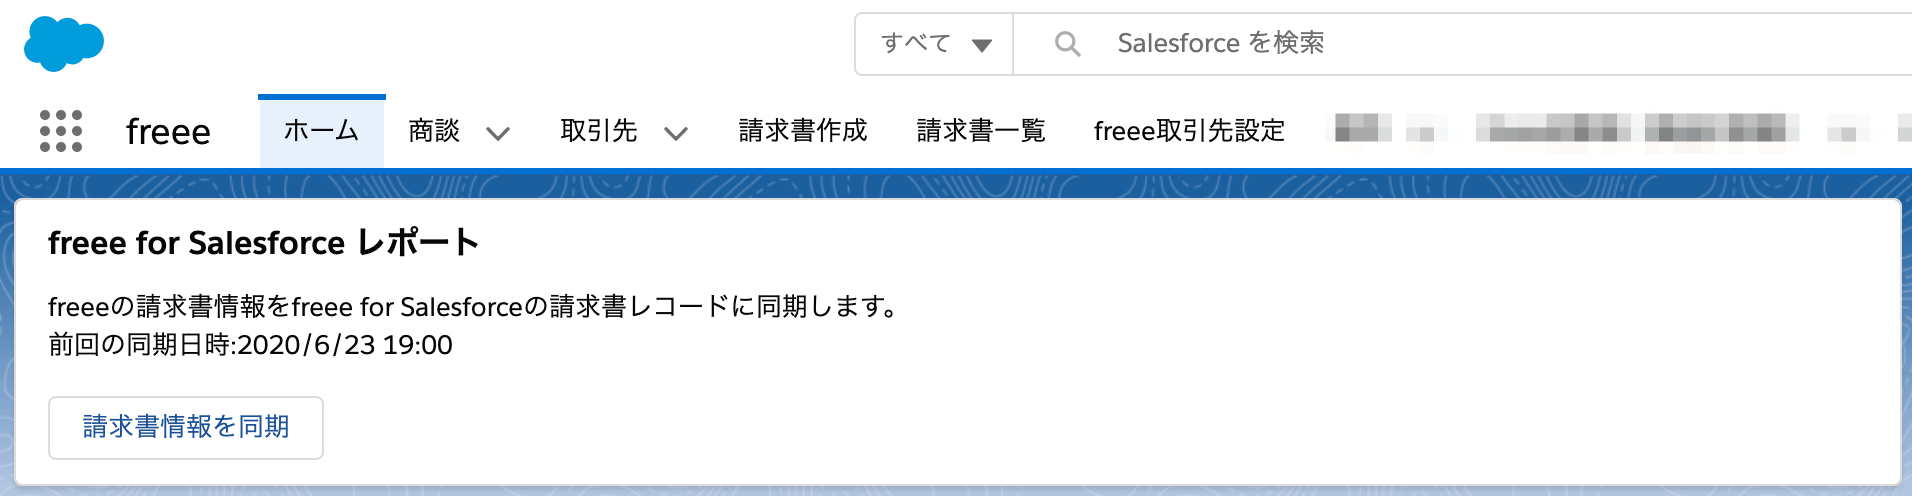 「freee for Salesforceレポート」画面のスクリーンショット